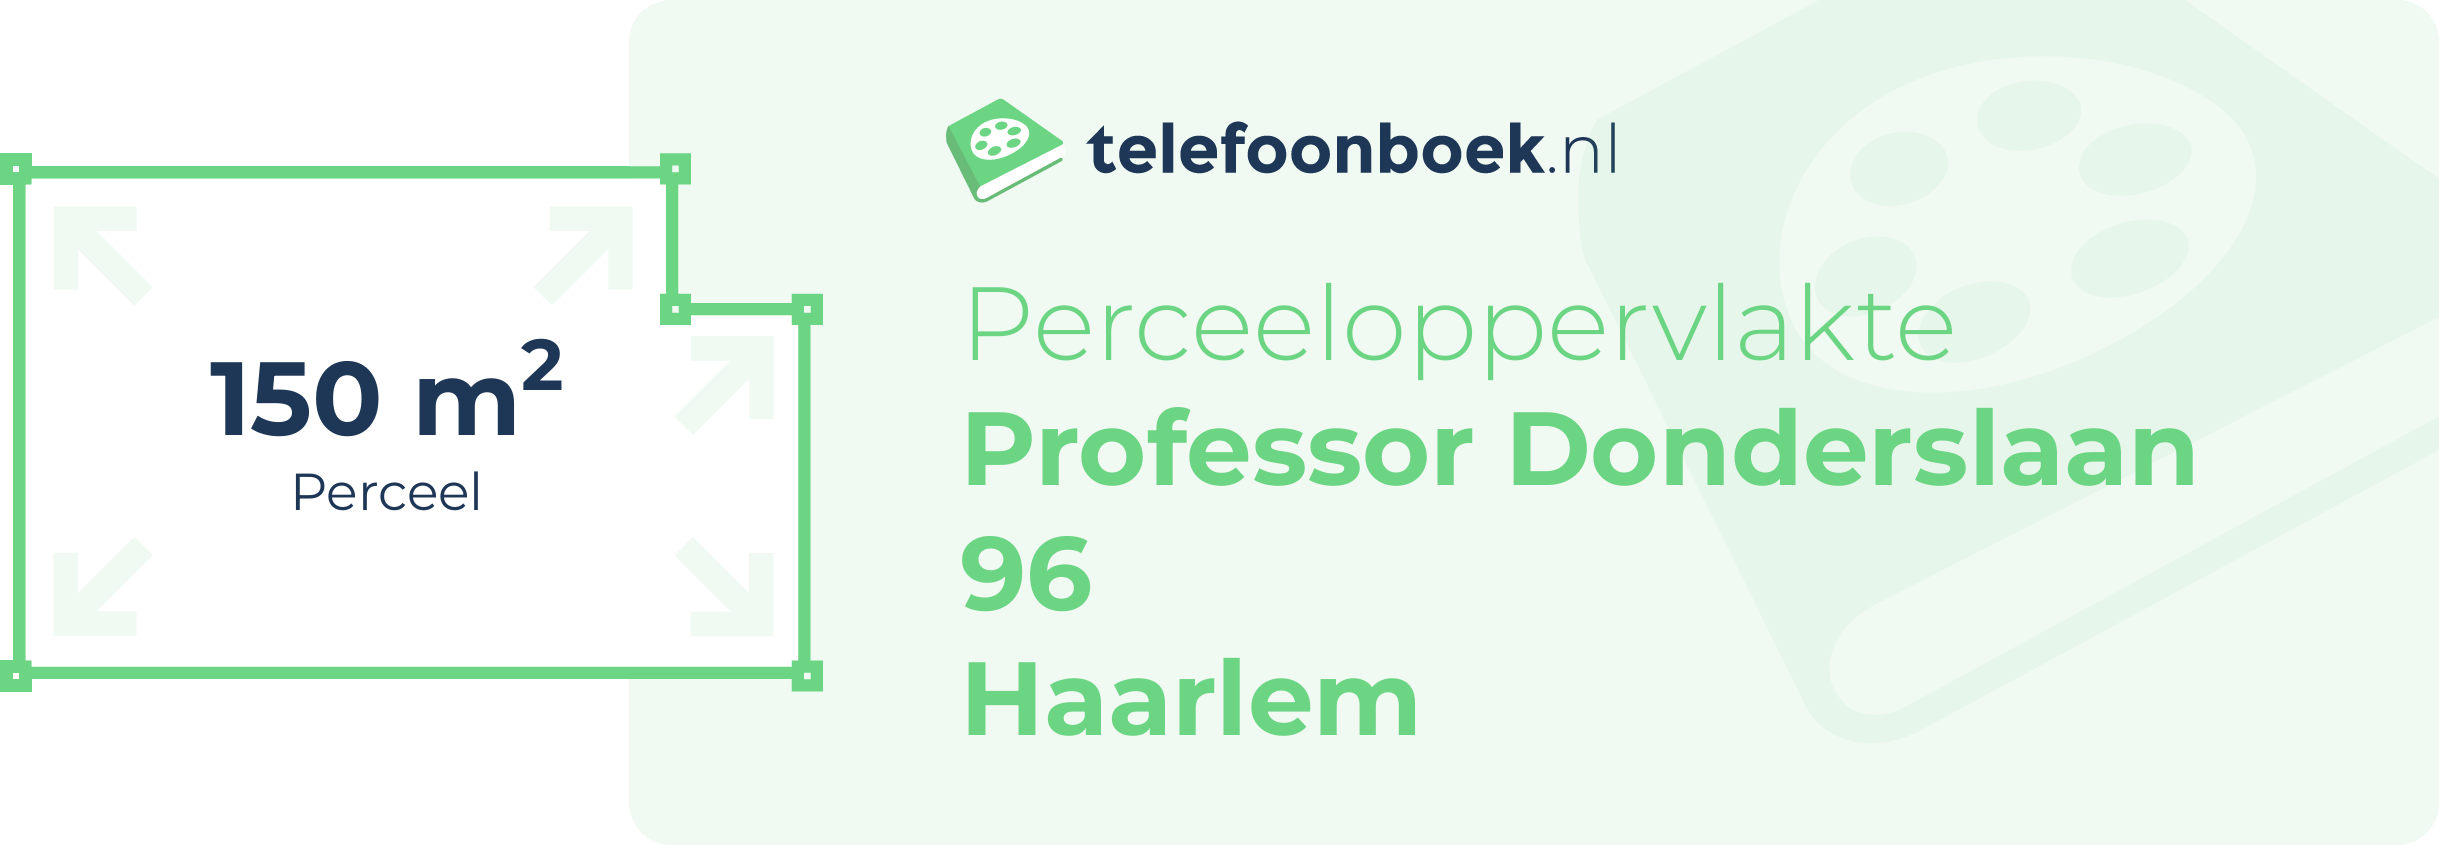 Perceeloppervlakte Professor Donderslaan 96 Haarlem